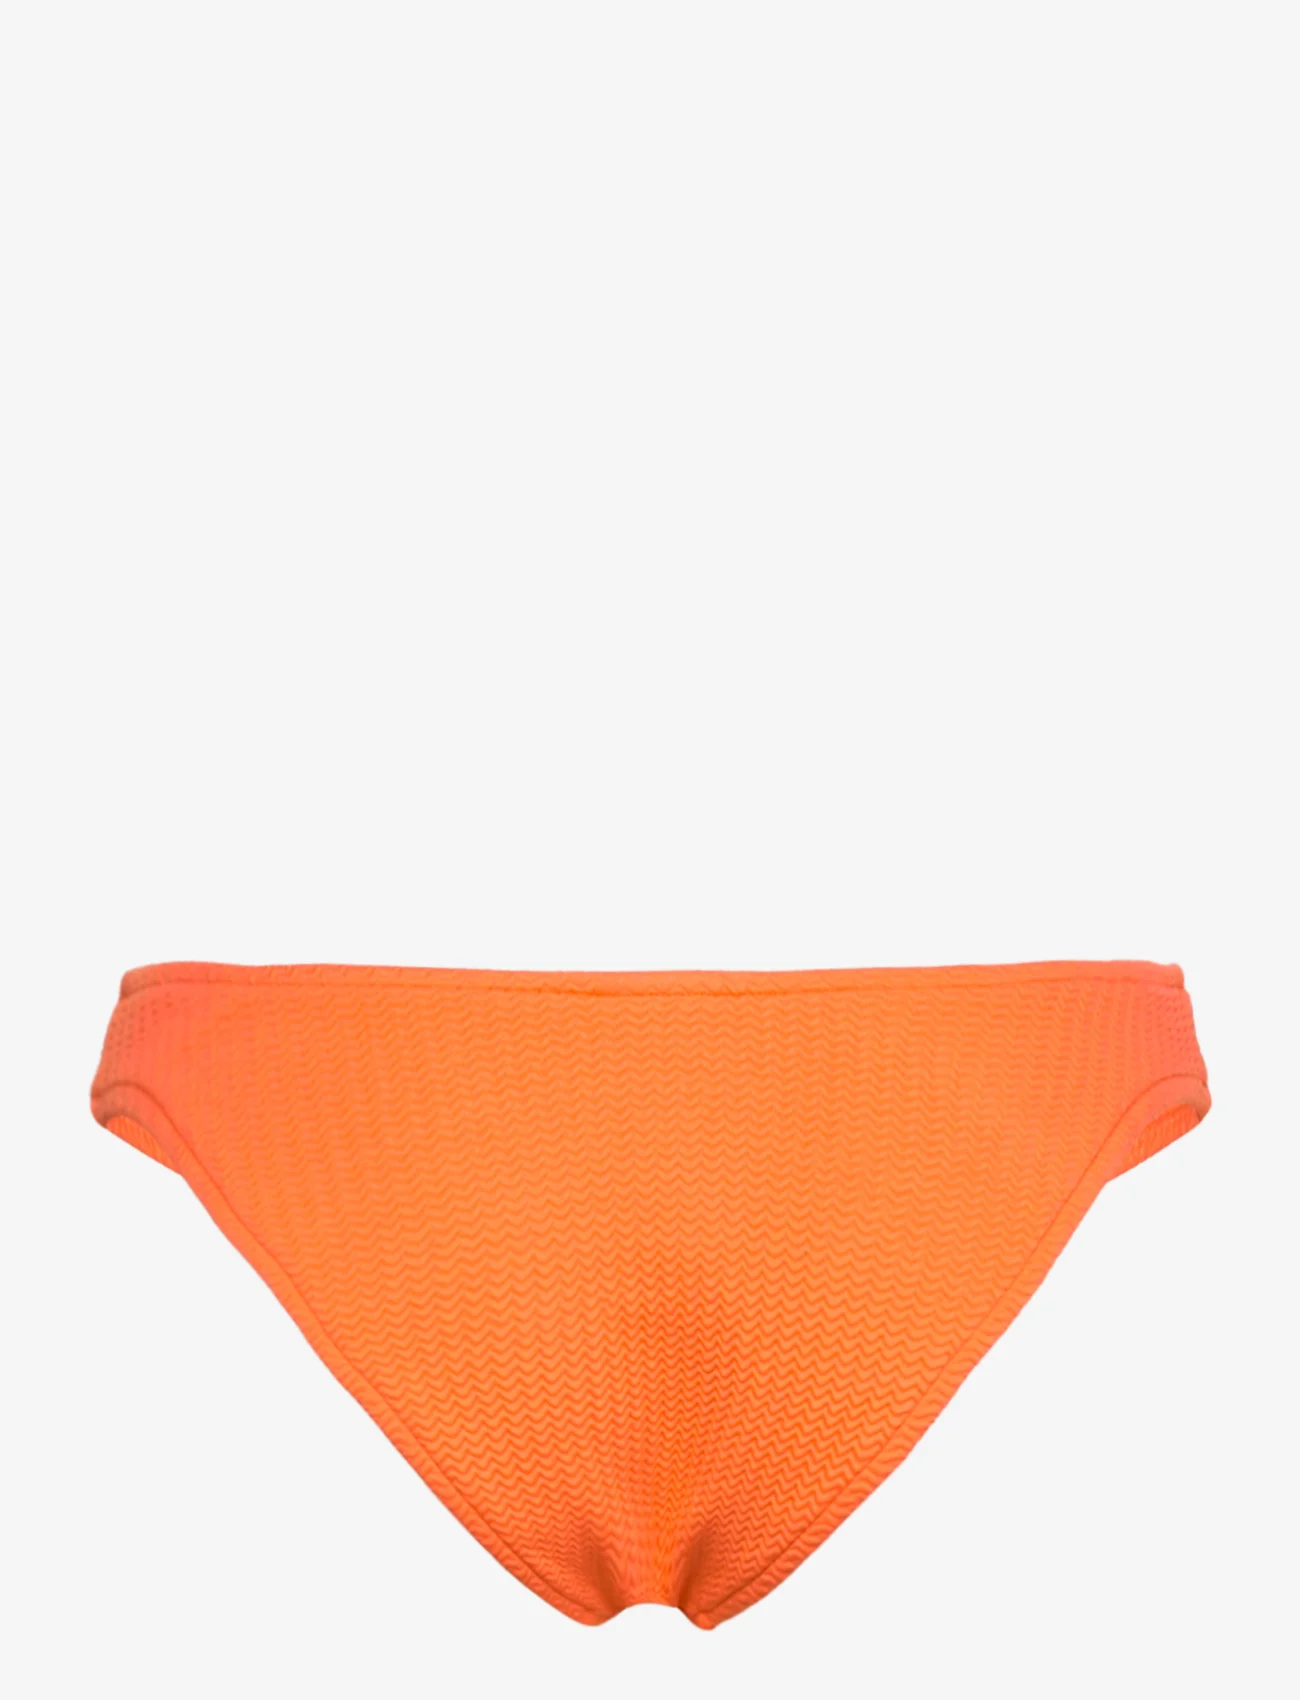 Seafolly - SeaDive High Cut Pant - bikinibriefs - mandarin - 1